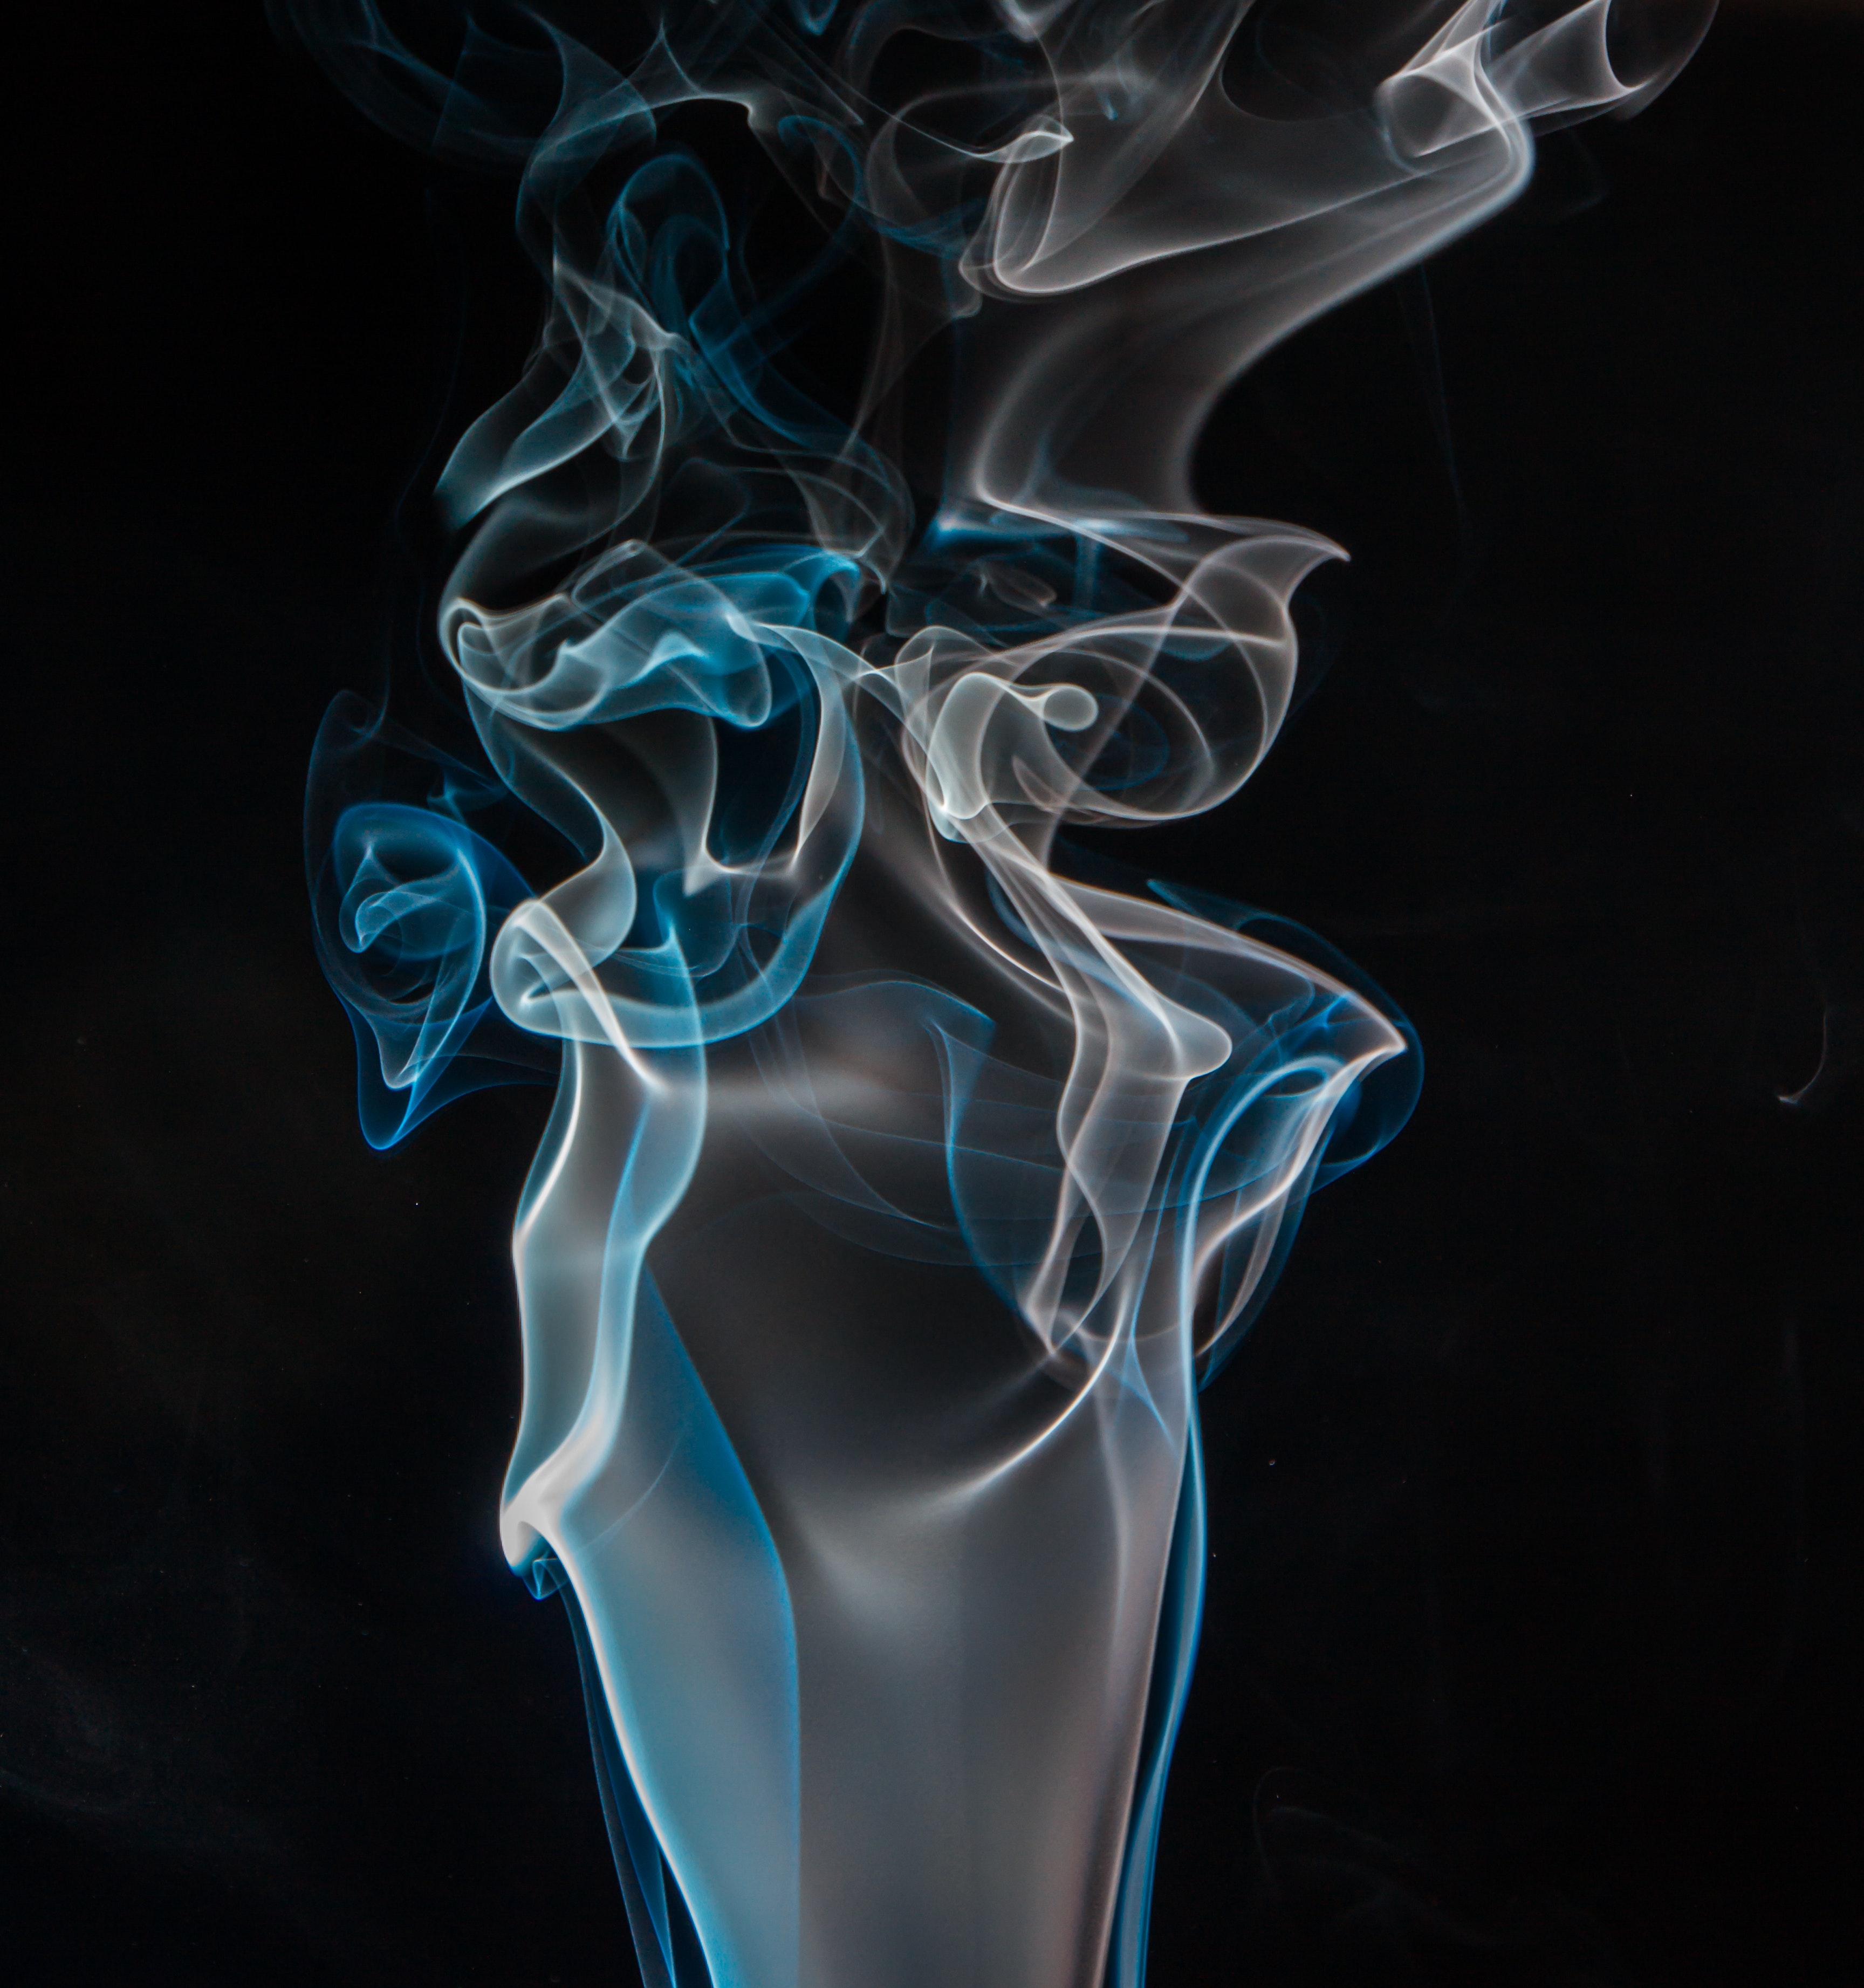 abstract, smoke, colored smoke, coloured smoke, shroud, clots, coils